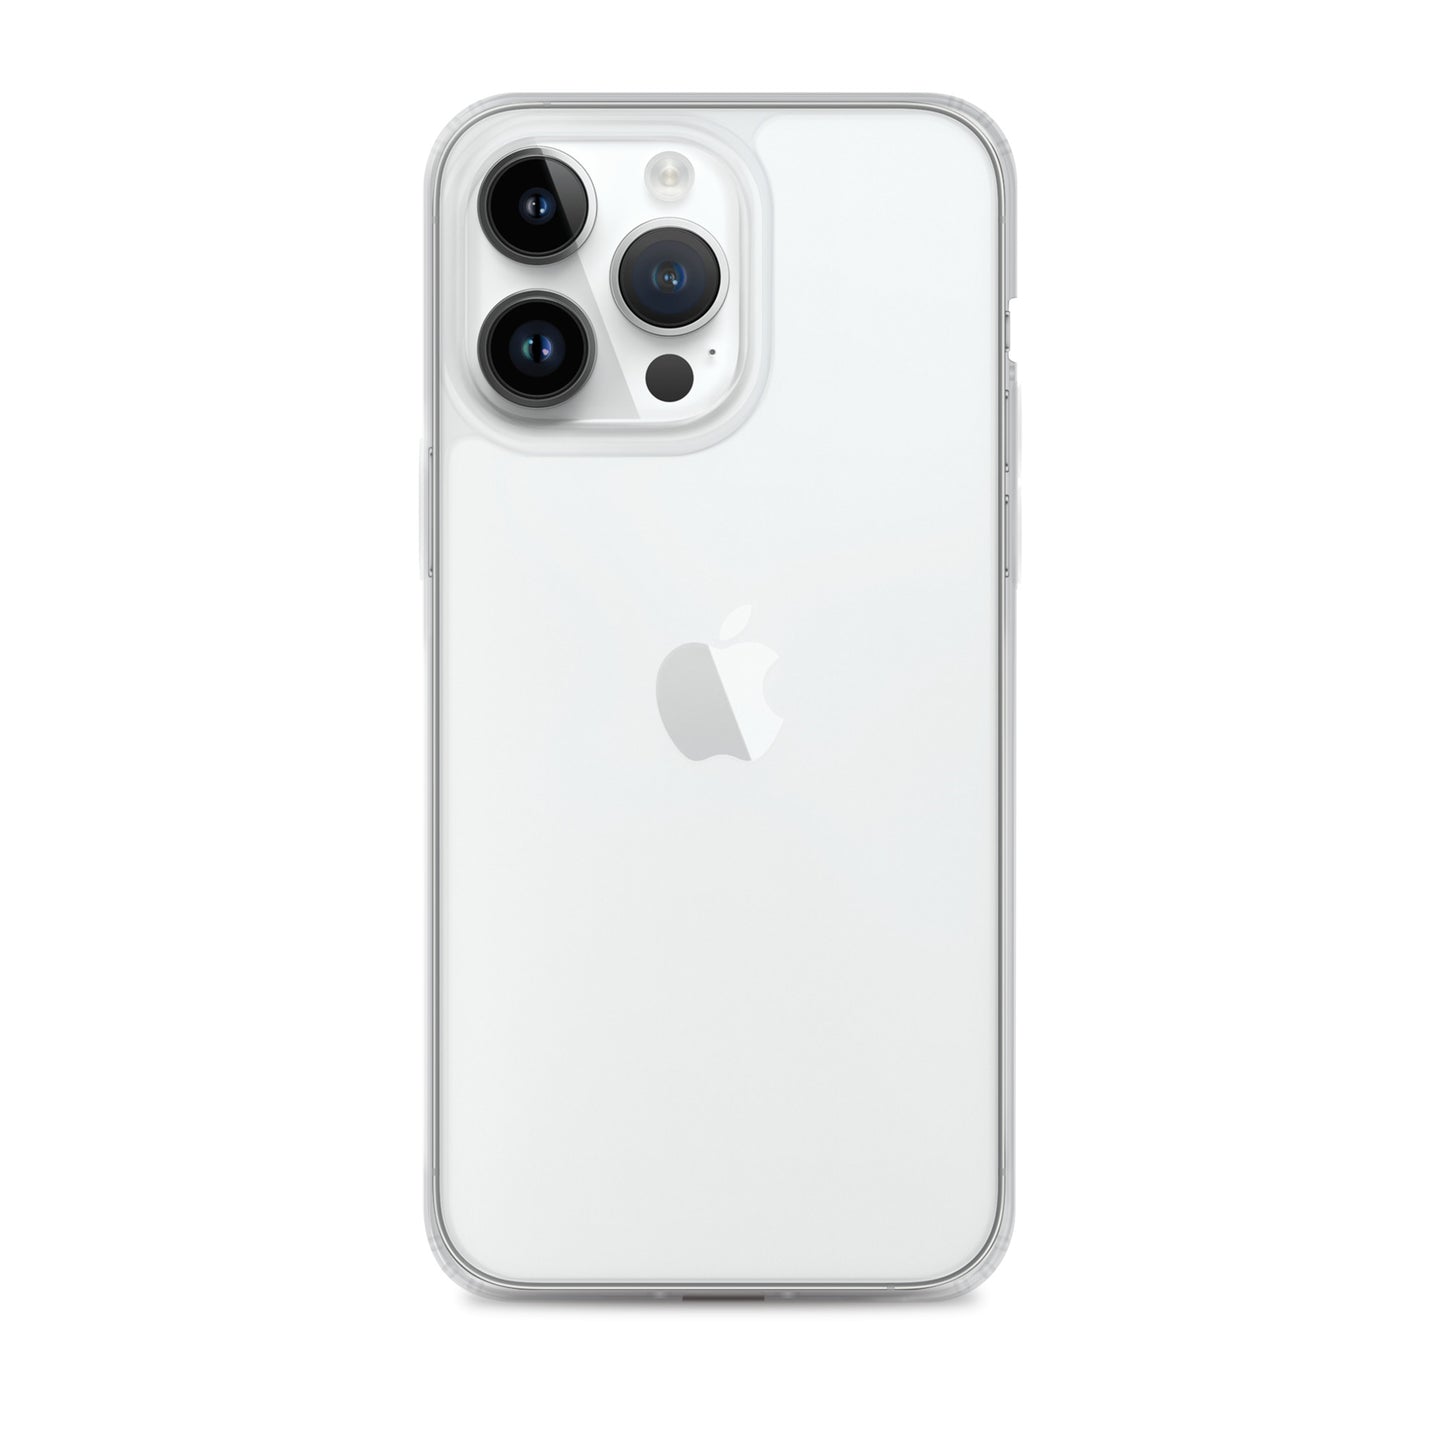 Clear iPhone Breeze Blocks "Motif" Case - Grey